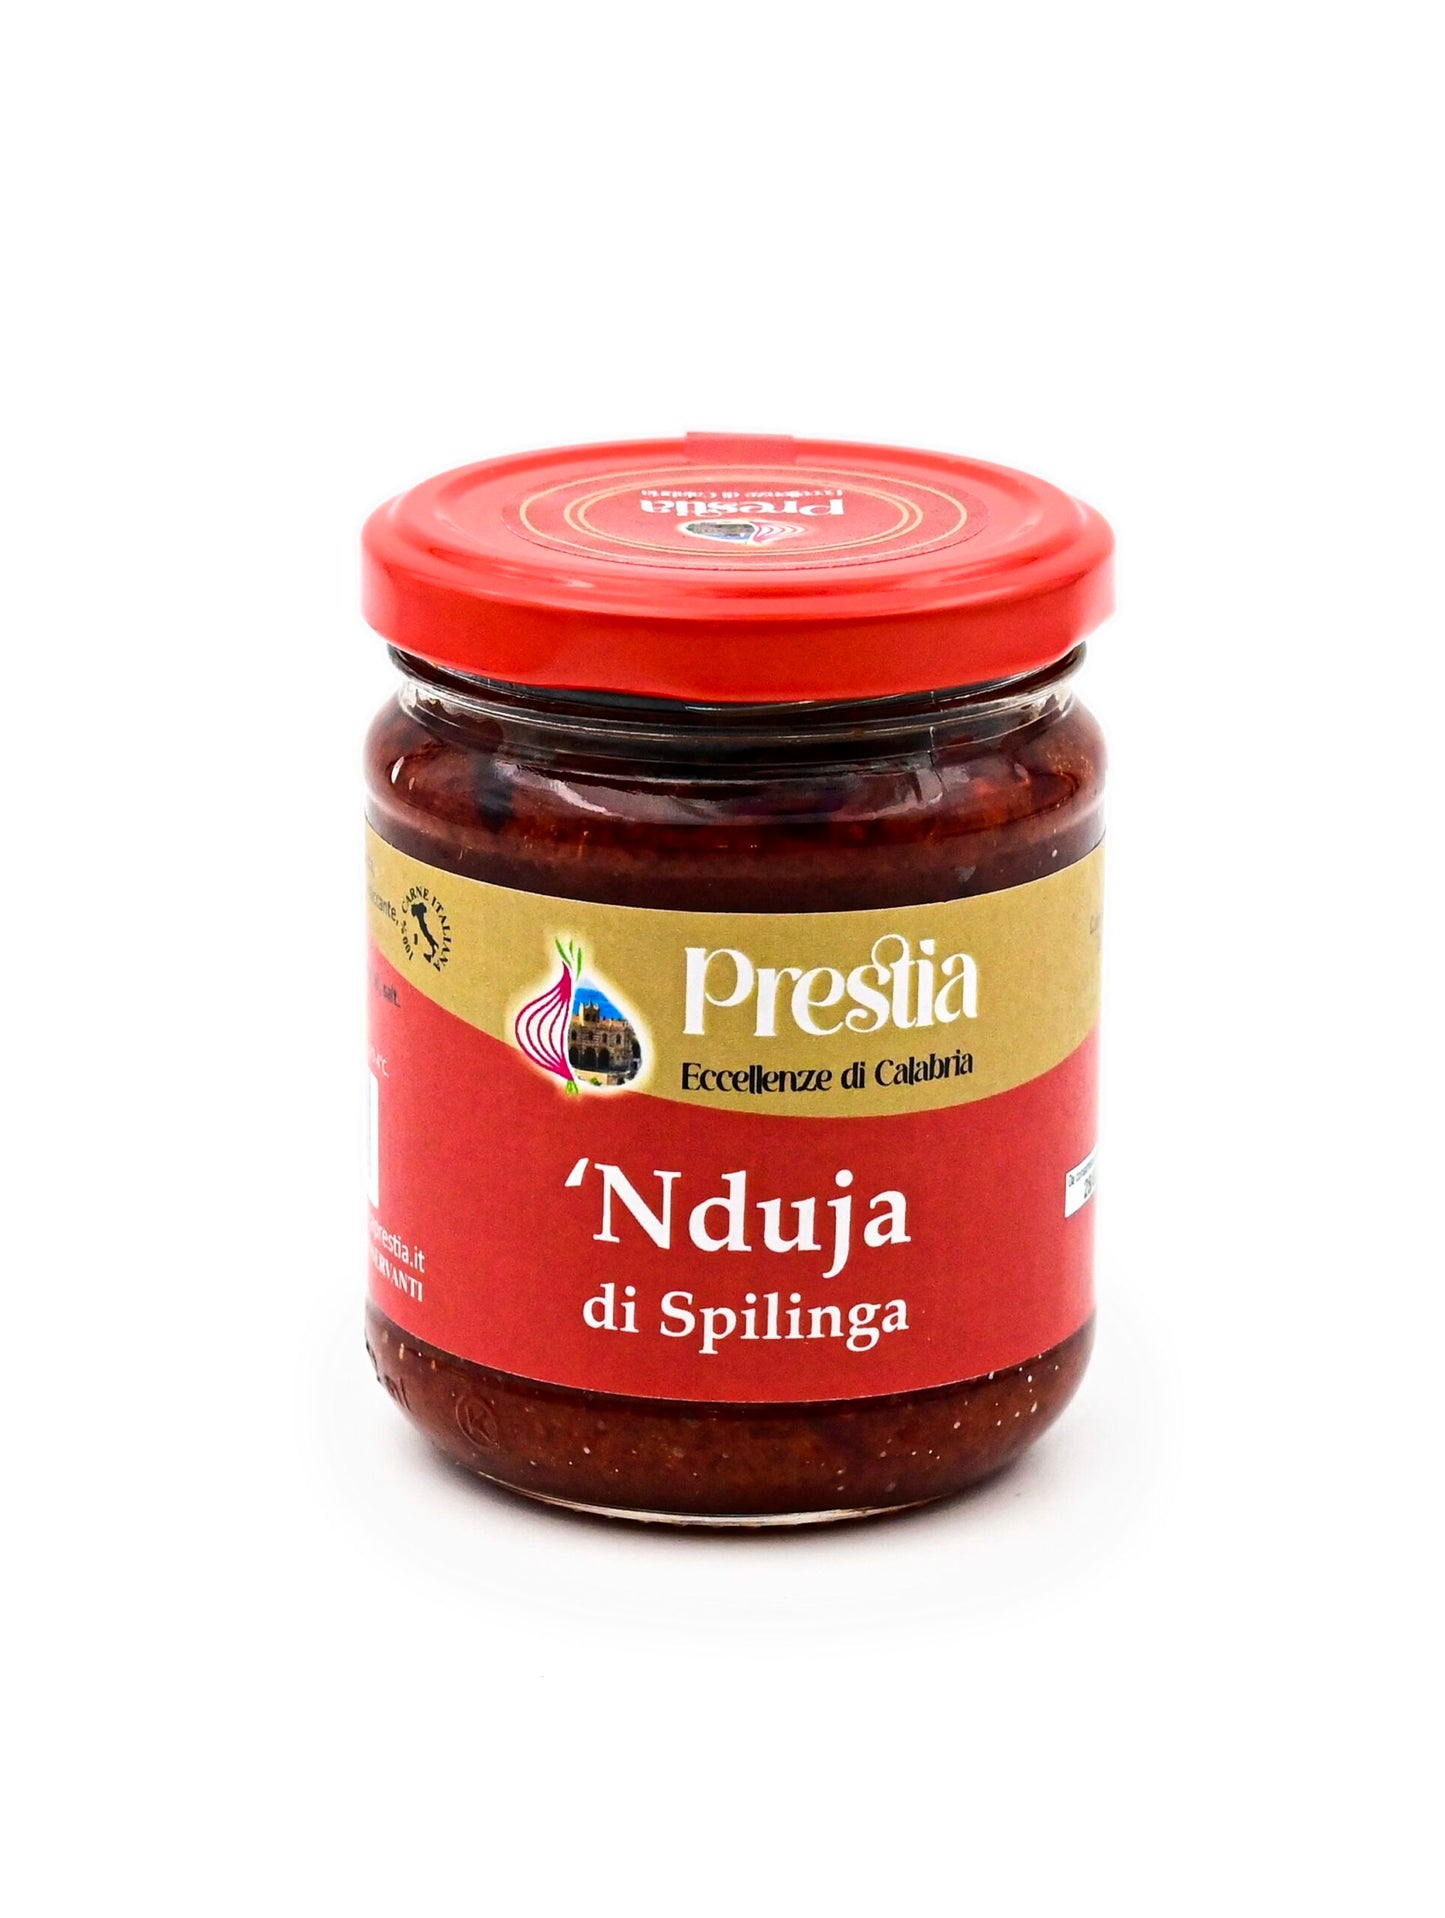 Jar of 'Nduja from Spilinga